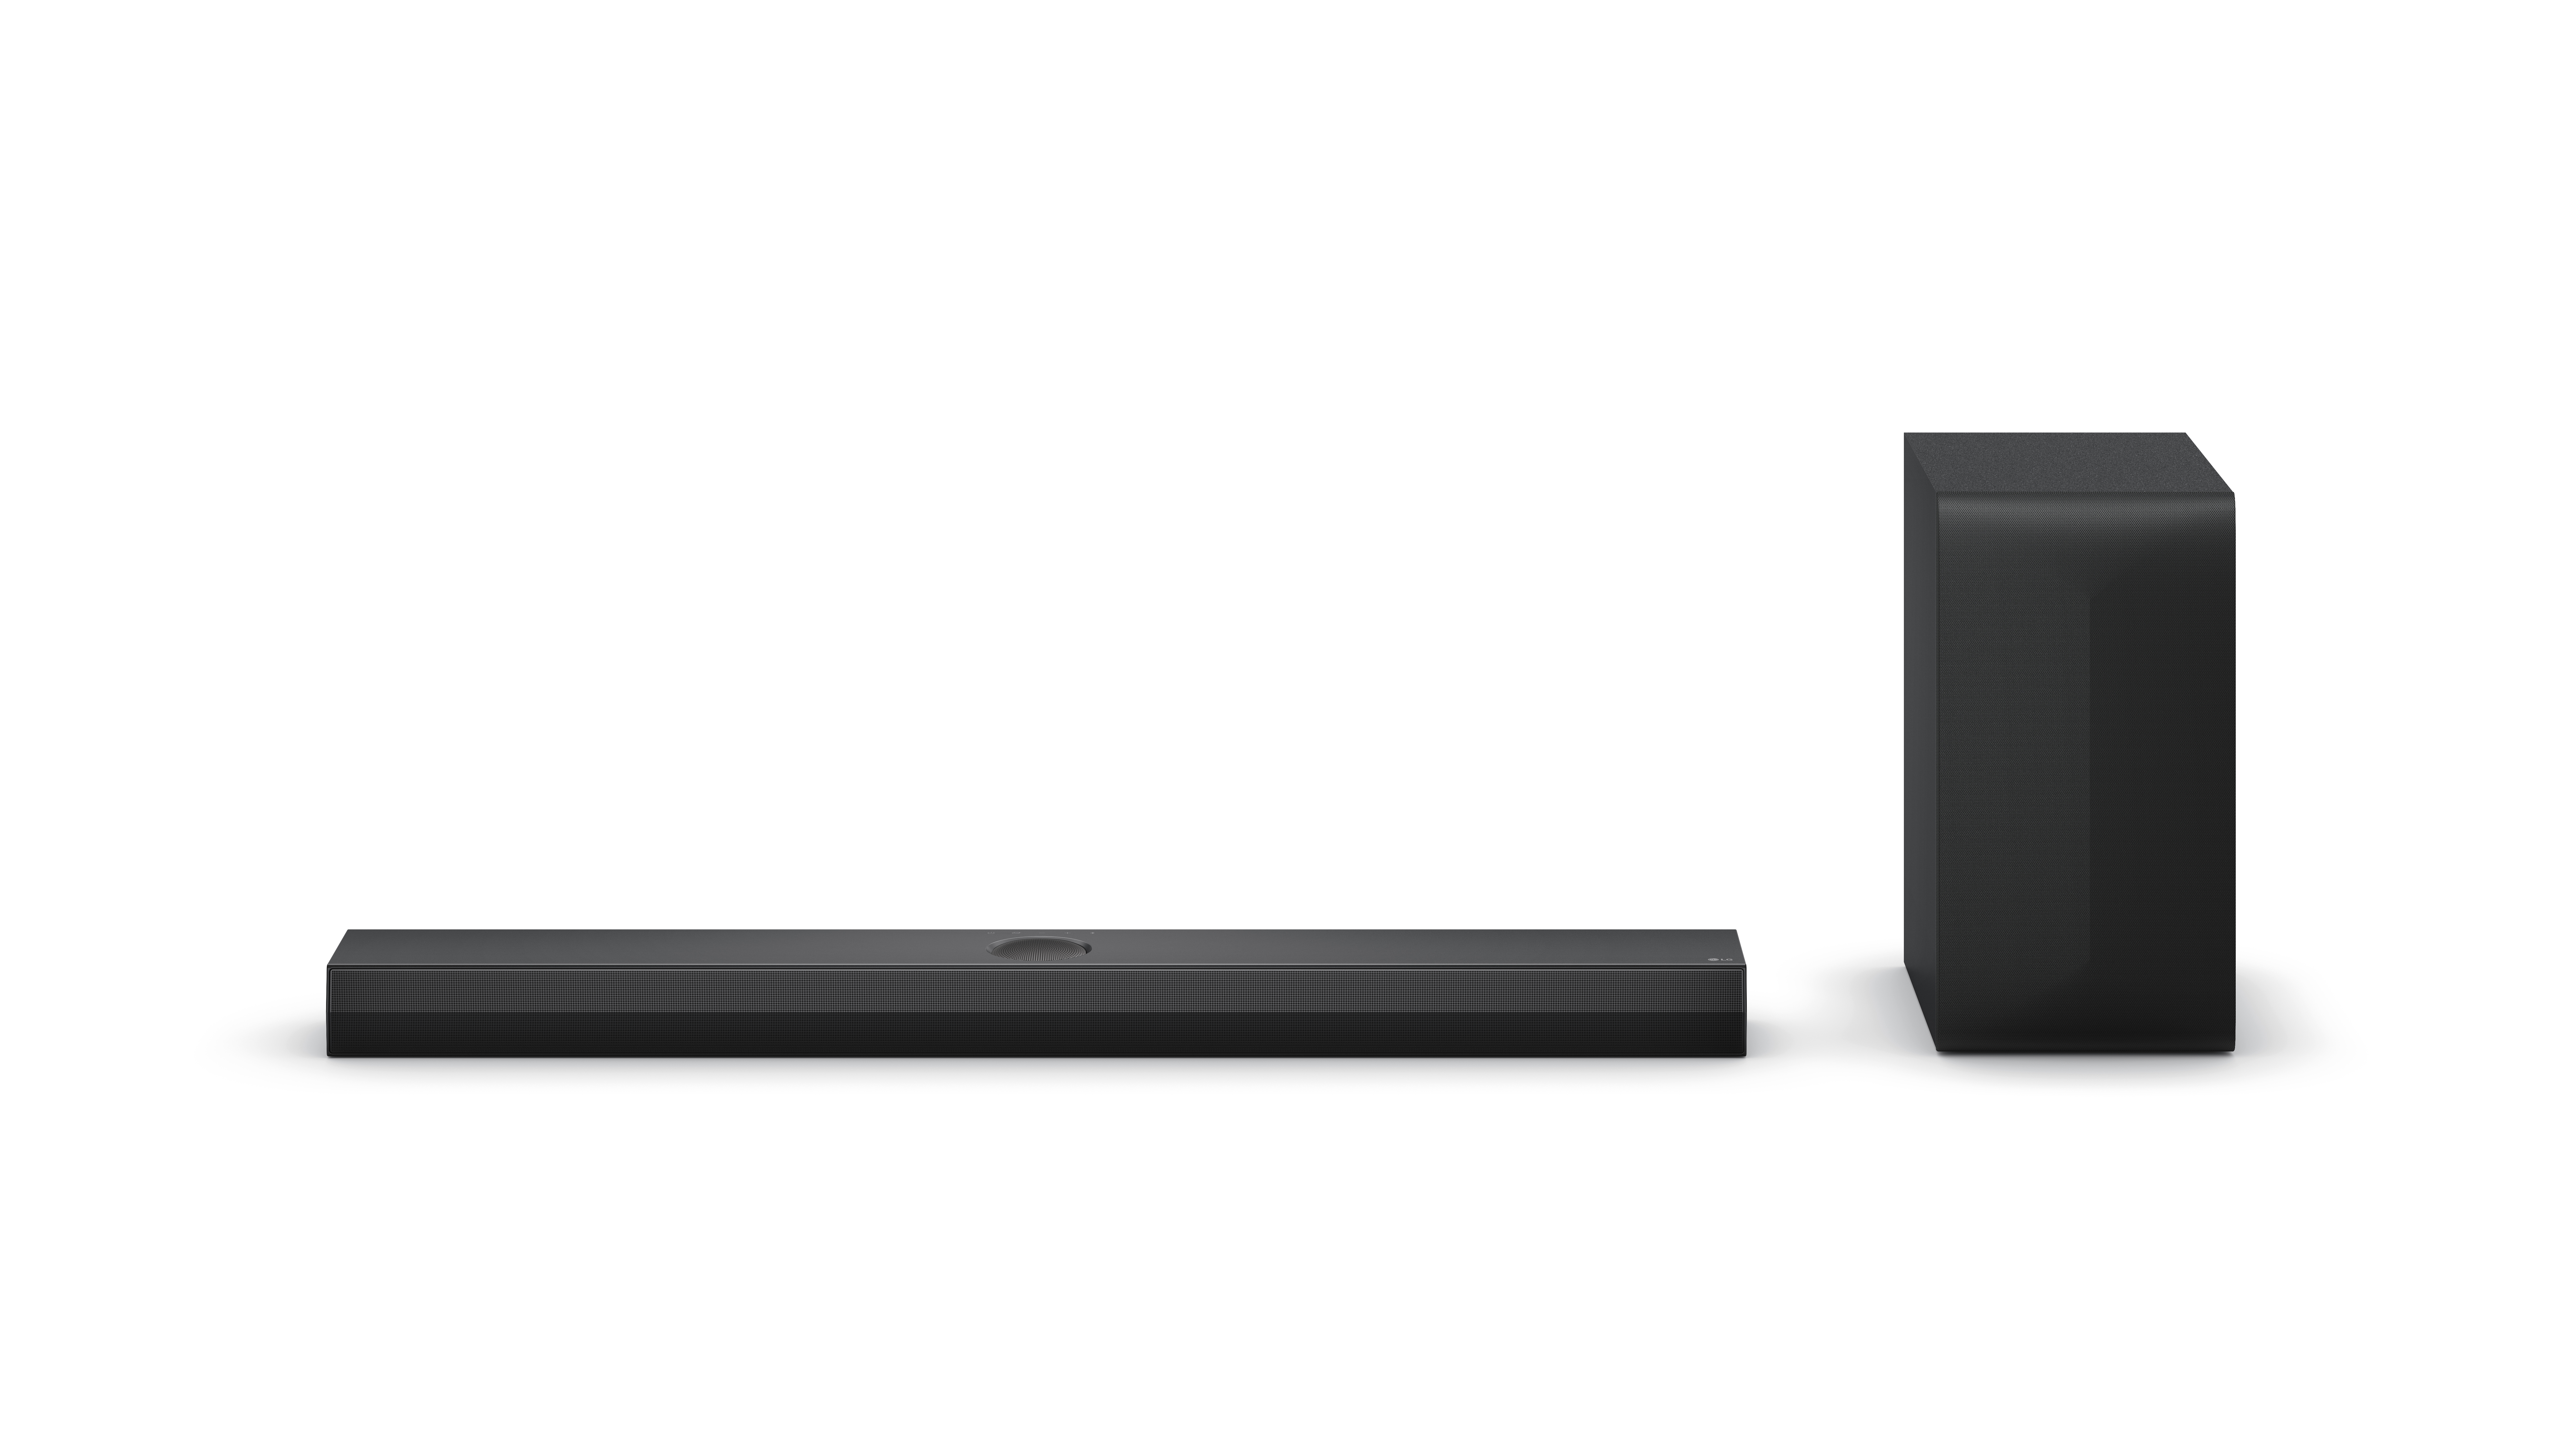 S7 schwarz günstig Kaufen-LG DS70TY 3.1.1 Dolby Atmos Soundbar, 400 Watt Subwoofer schwarz. LG DS70TY 3.1.1 Dolby Atmos Soundbar, 400 Watt Subwoofer schwarz <![CDATA[• 3.1.1 Dolby Atmos Soundbar mit 400 Watt • Center Upfiring Speaker in Soundbar • Dolby Atmos Music • Empfo